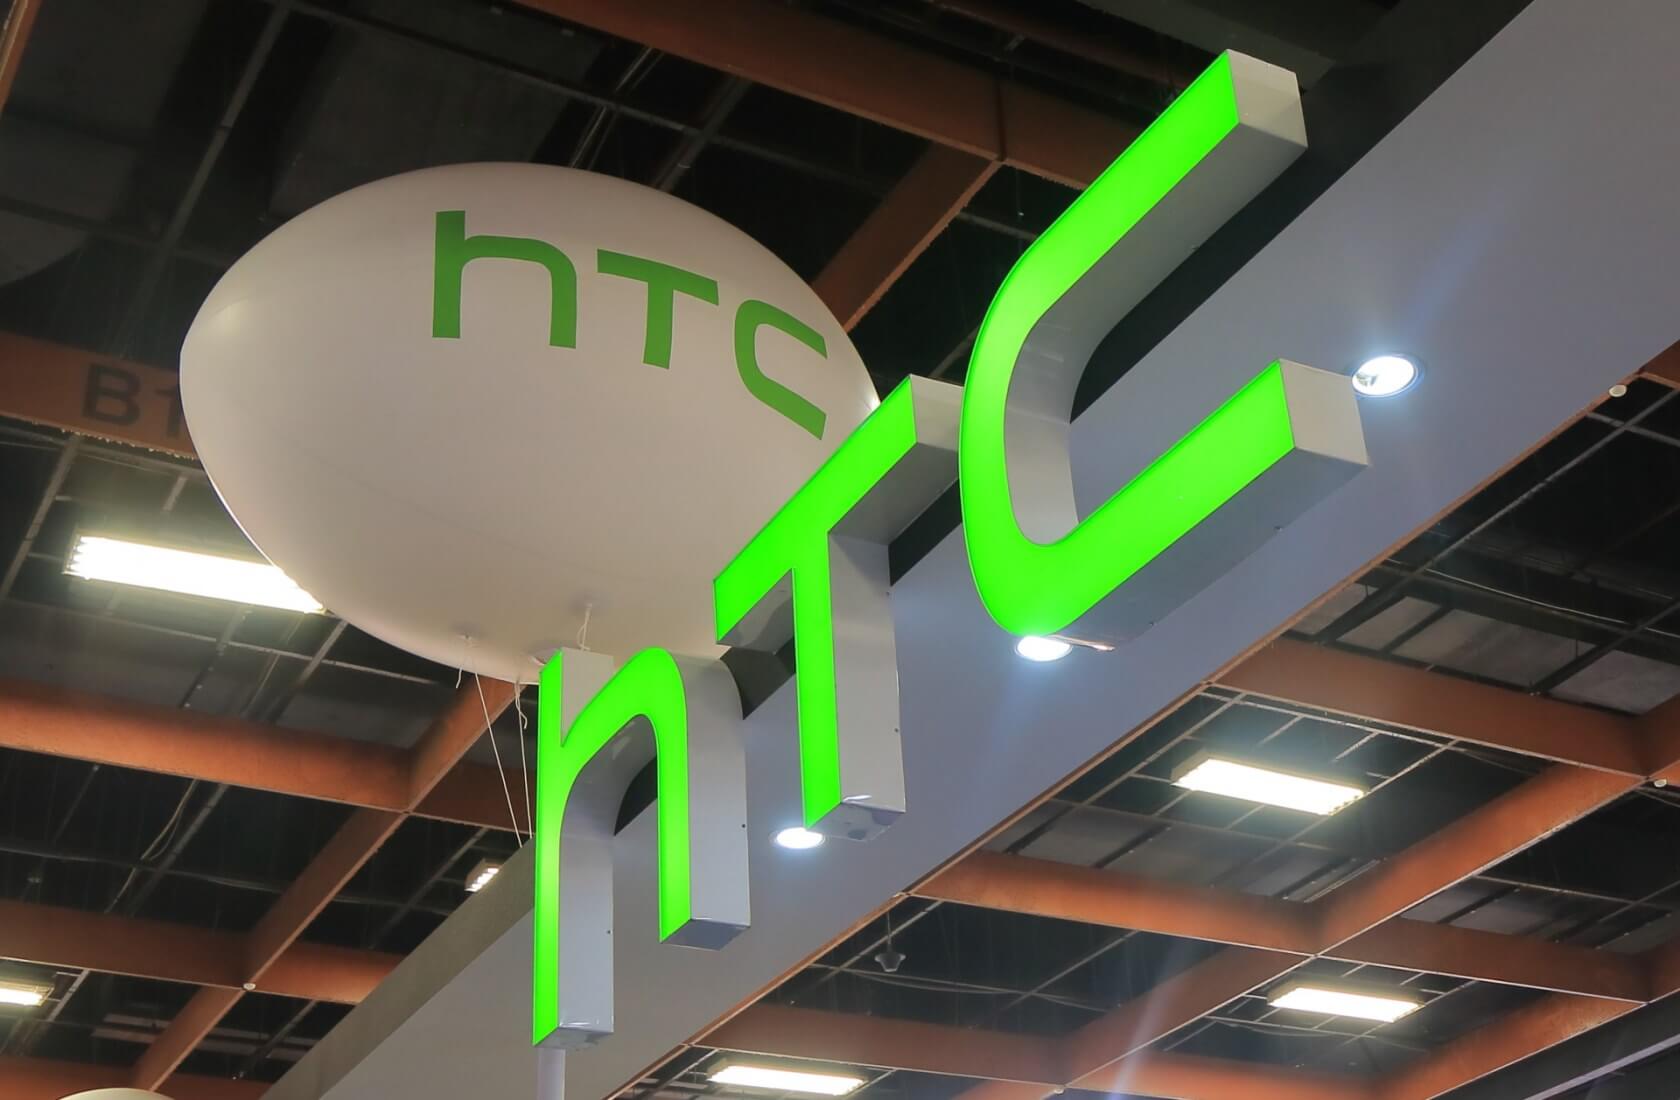 HTC teases its prototype 'Vive Proton' VR headset